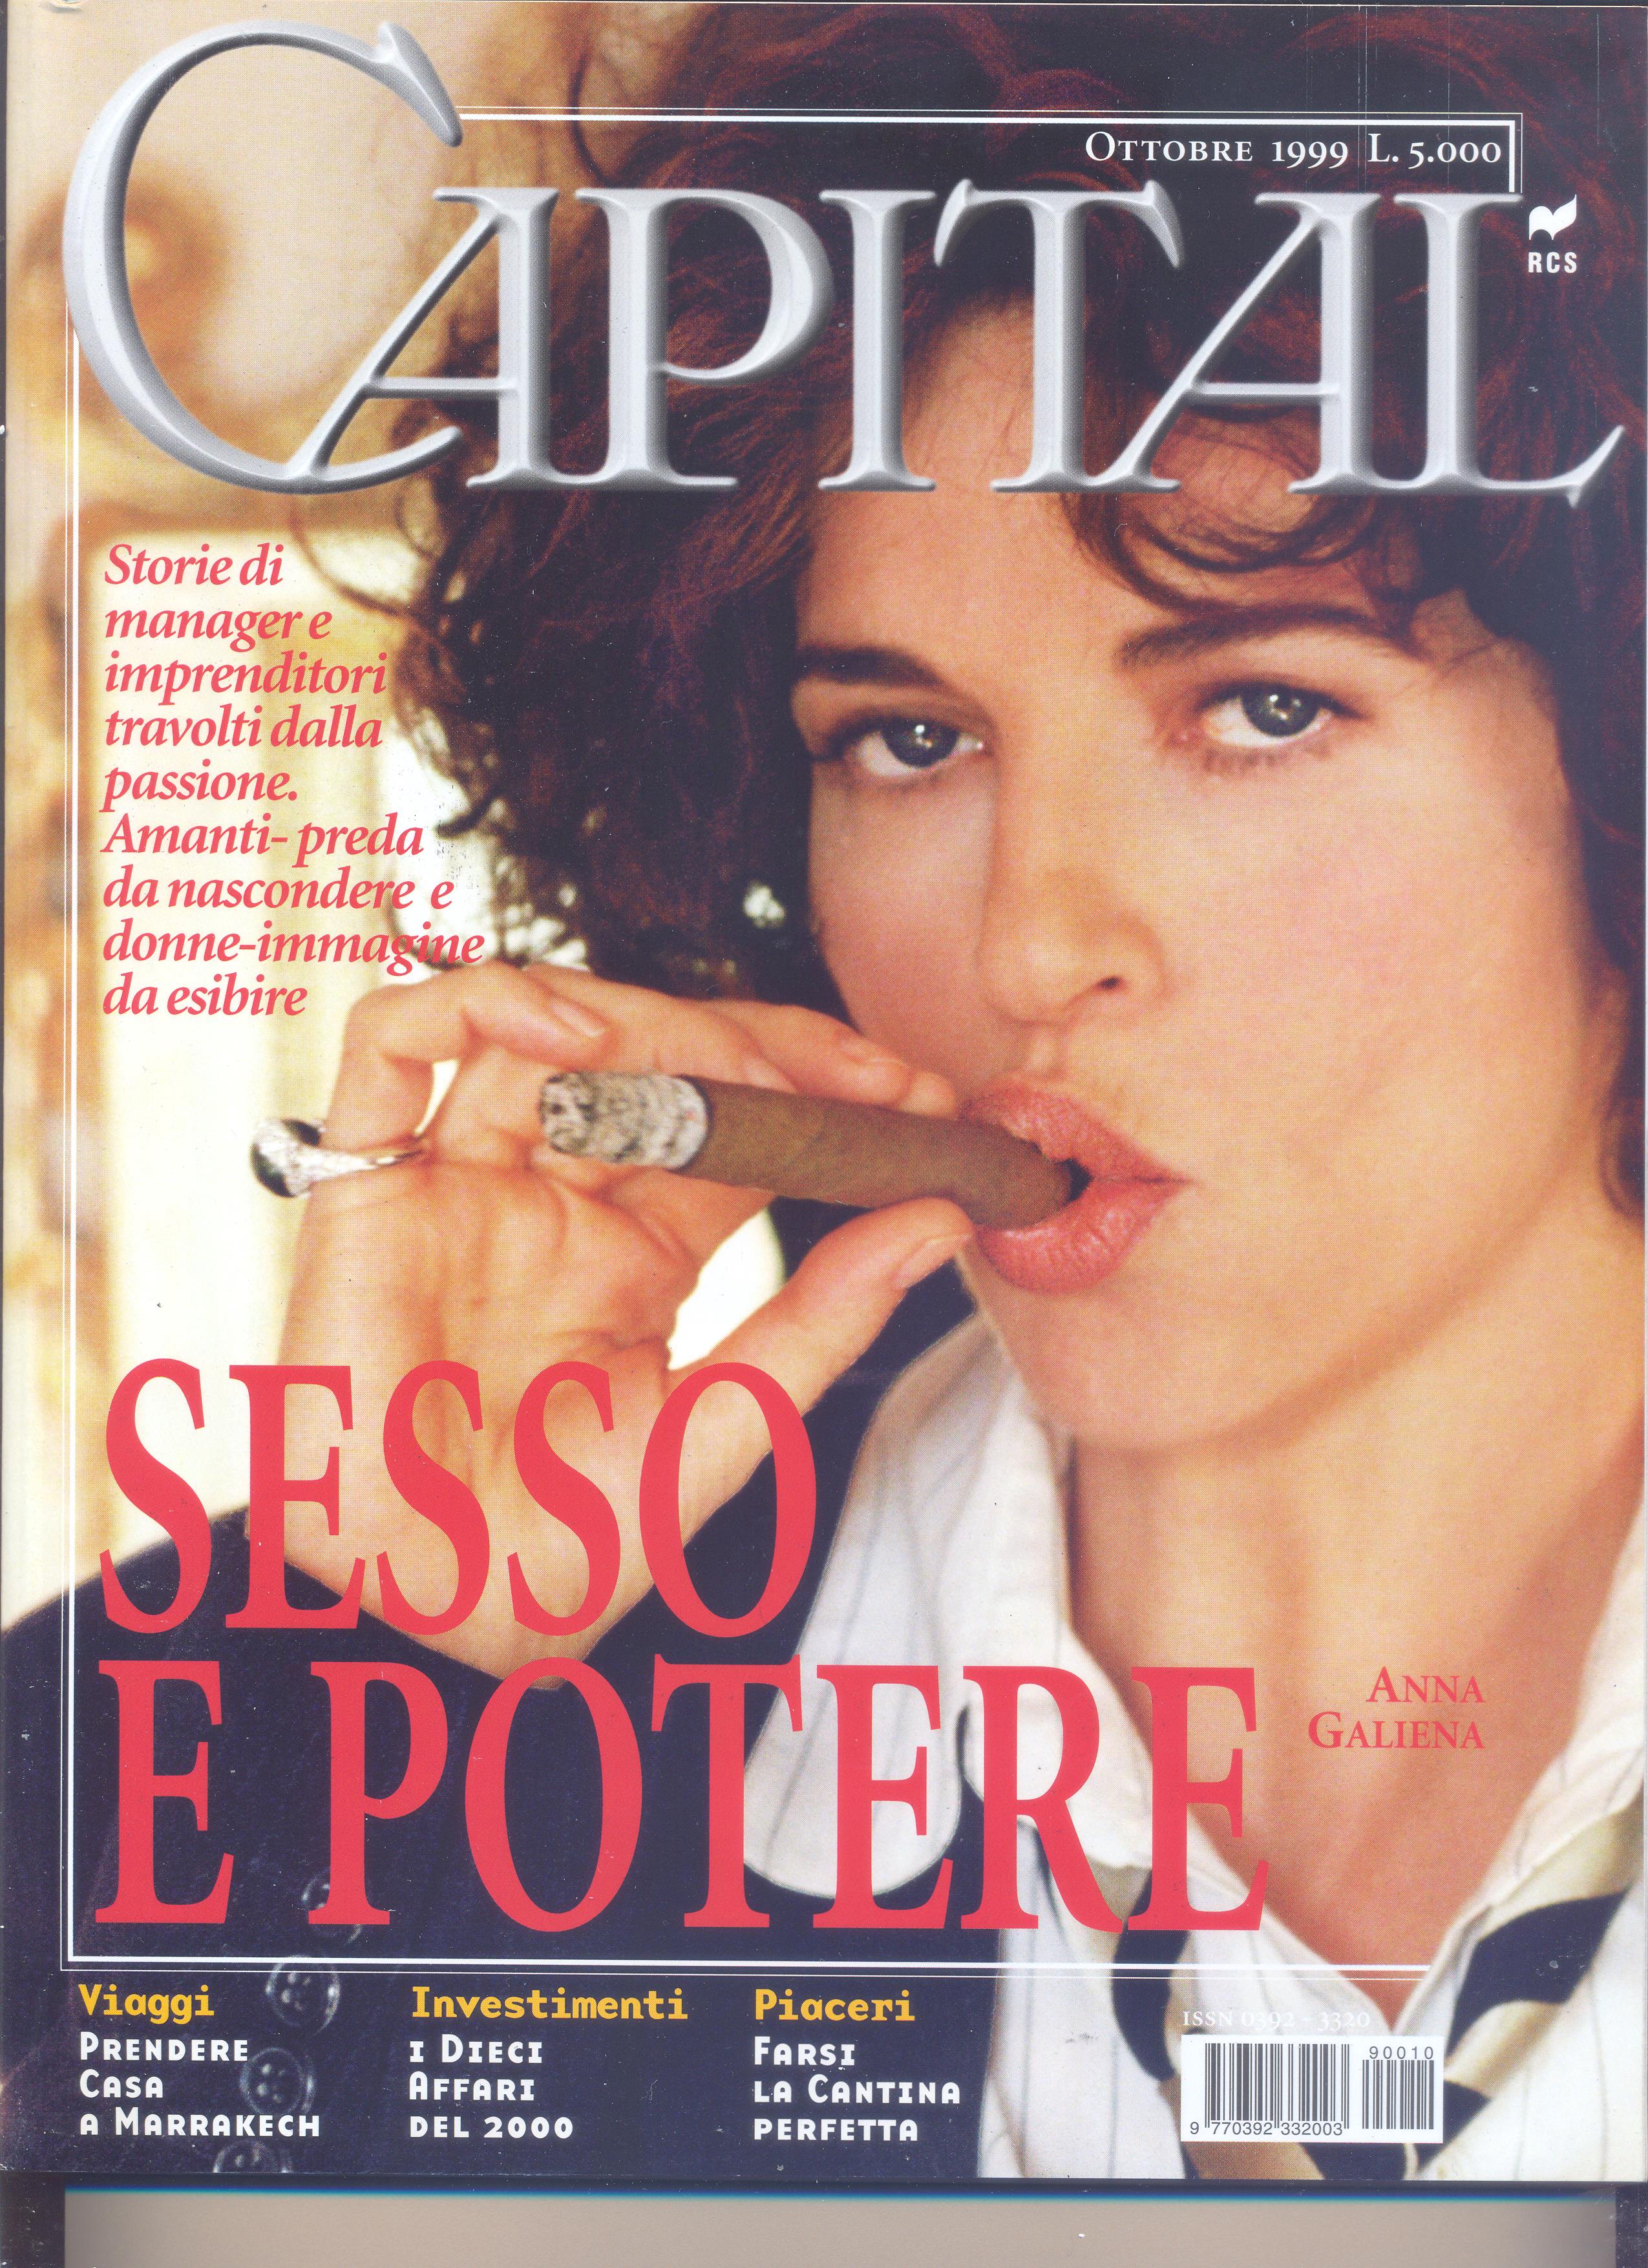 Capital Ottobre 1999